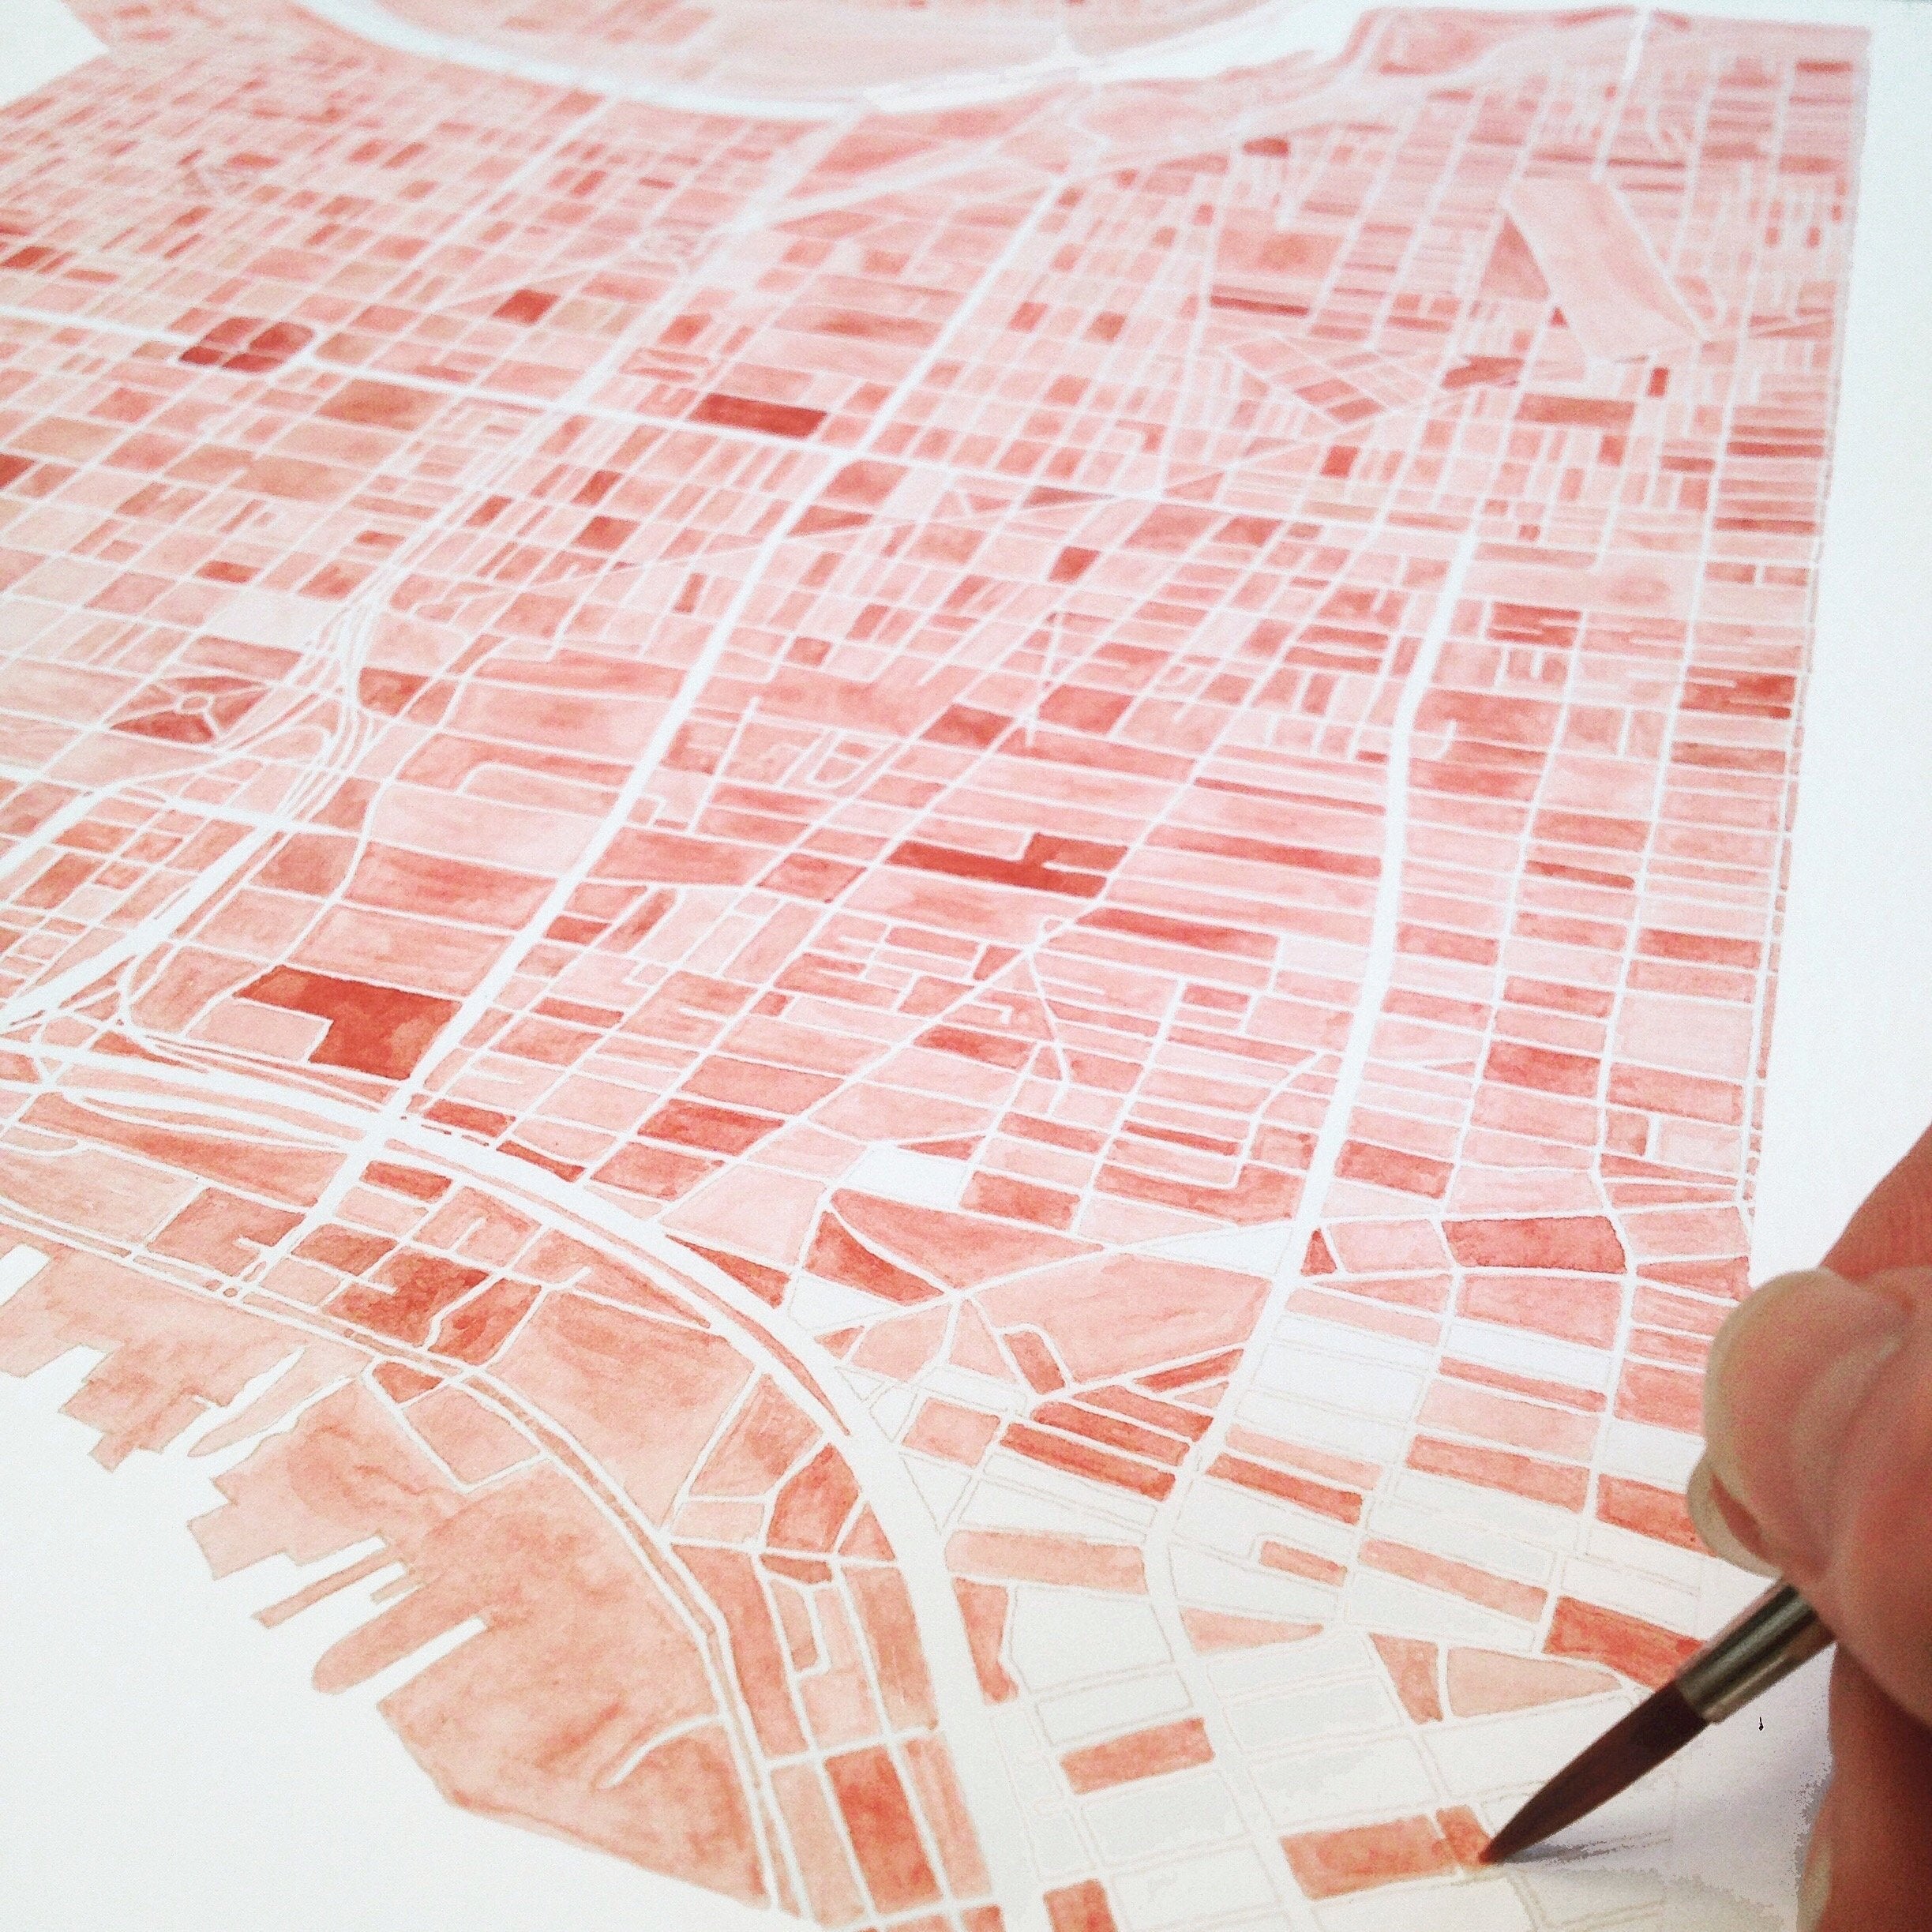 PHILADELPHIA Watercolor City Blocks Map: ORIGINAL PAINTING (Commission)